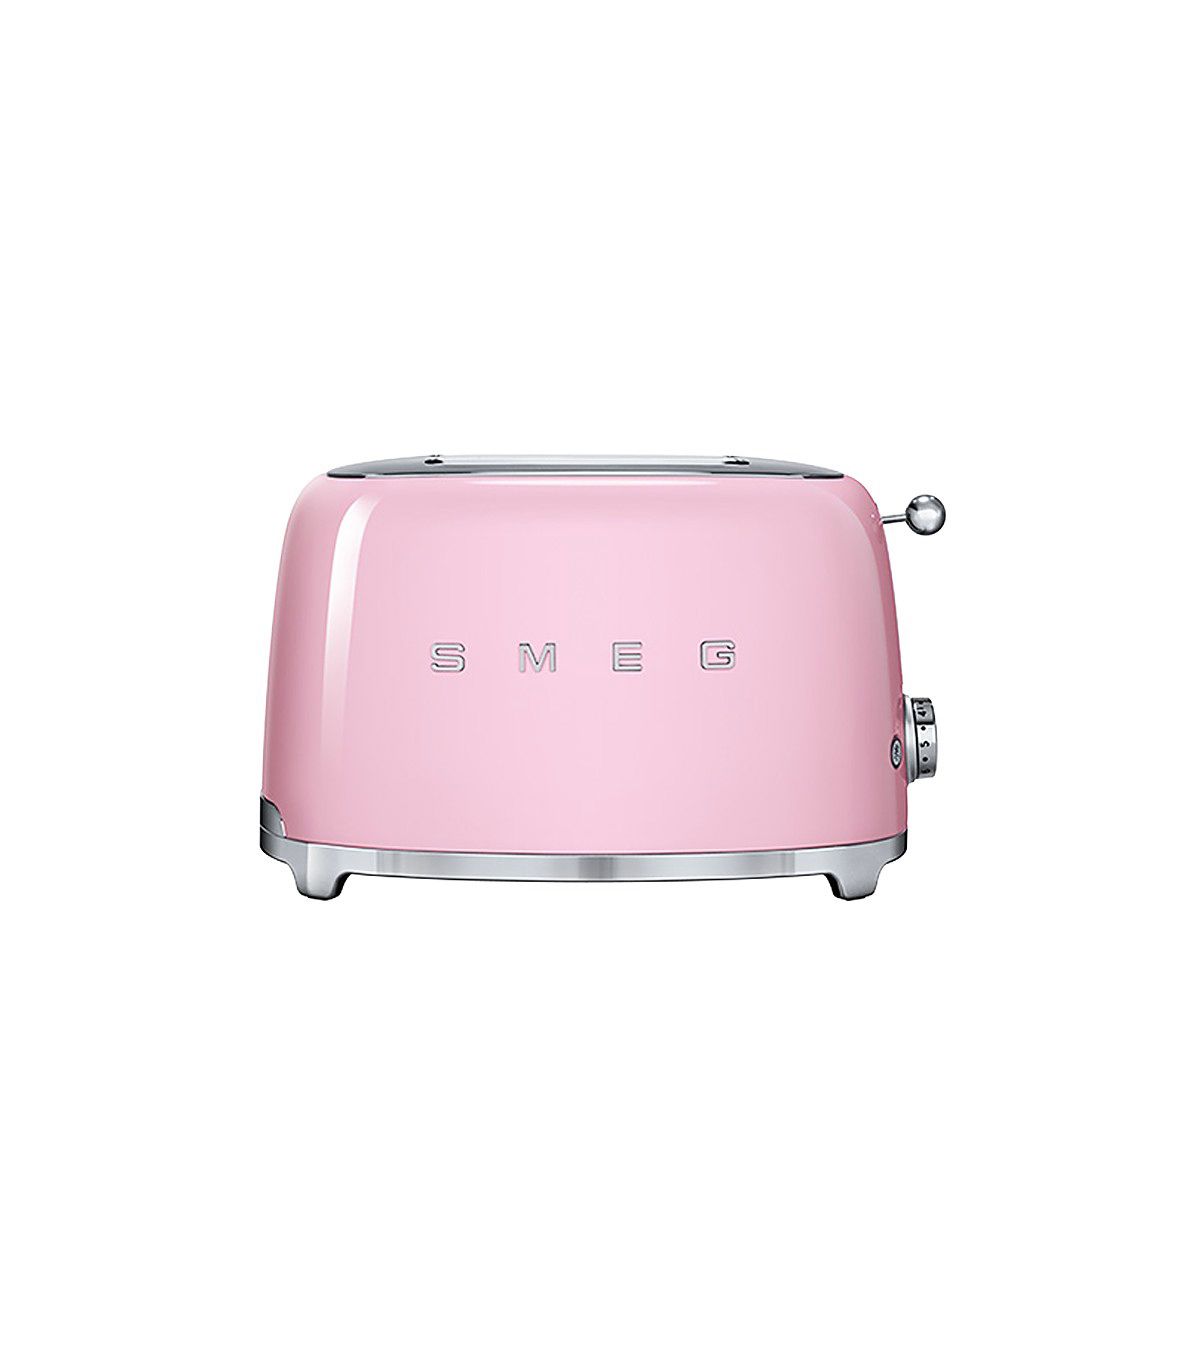 pink registry toaster